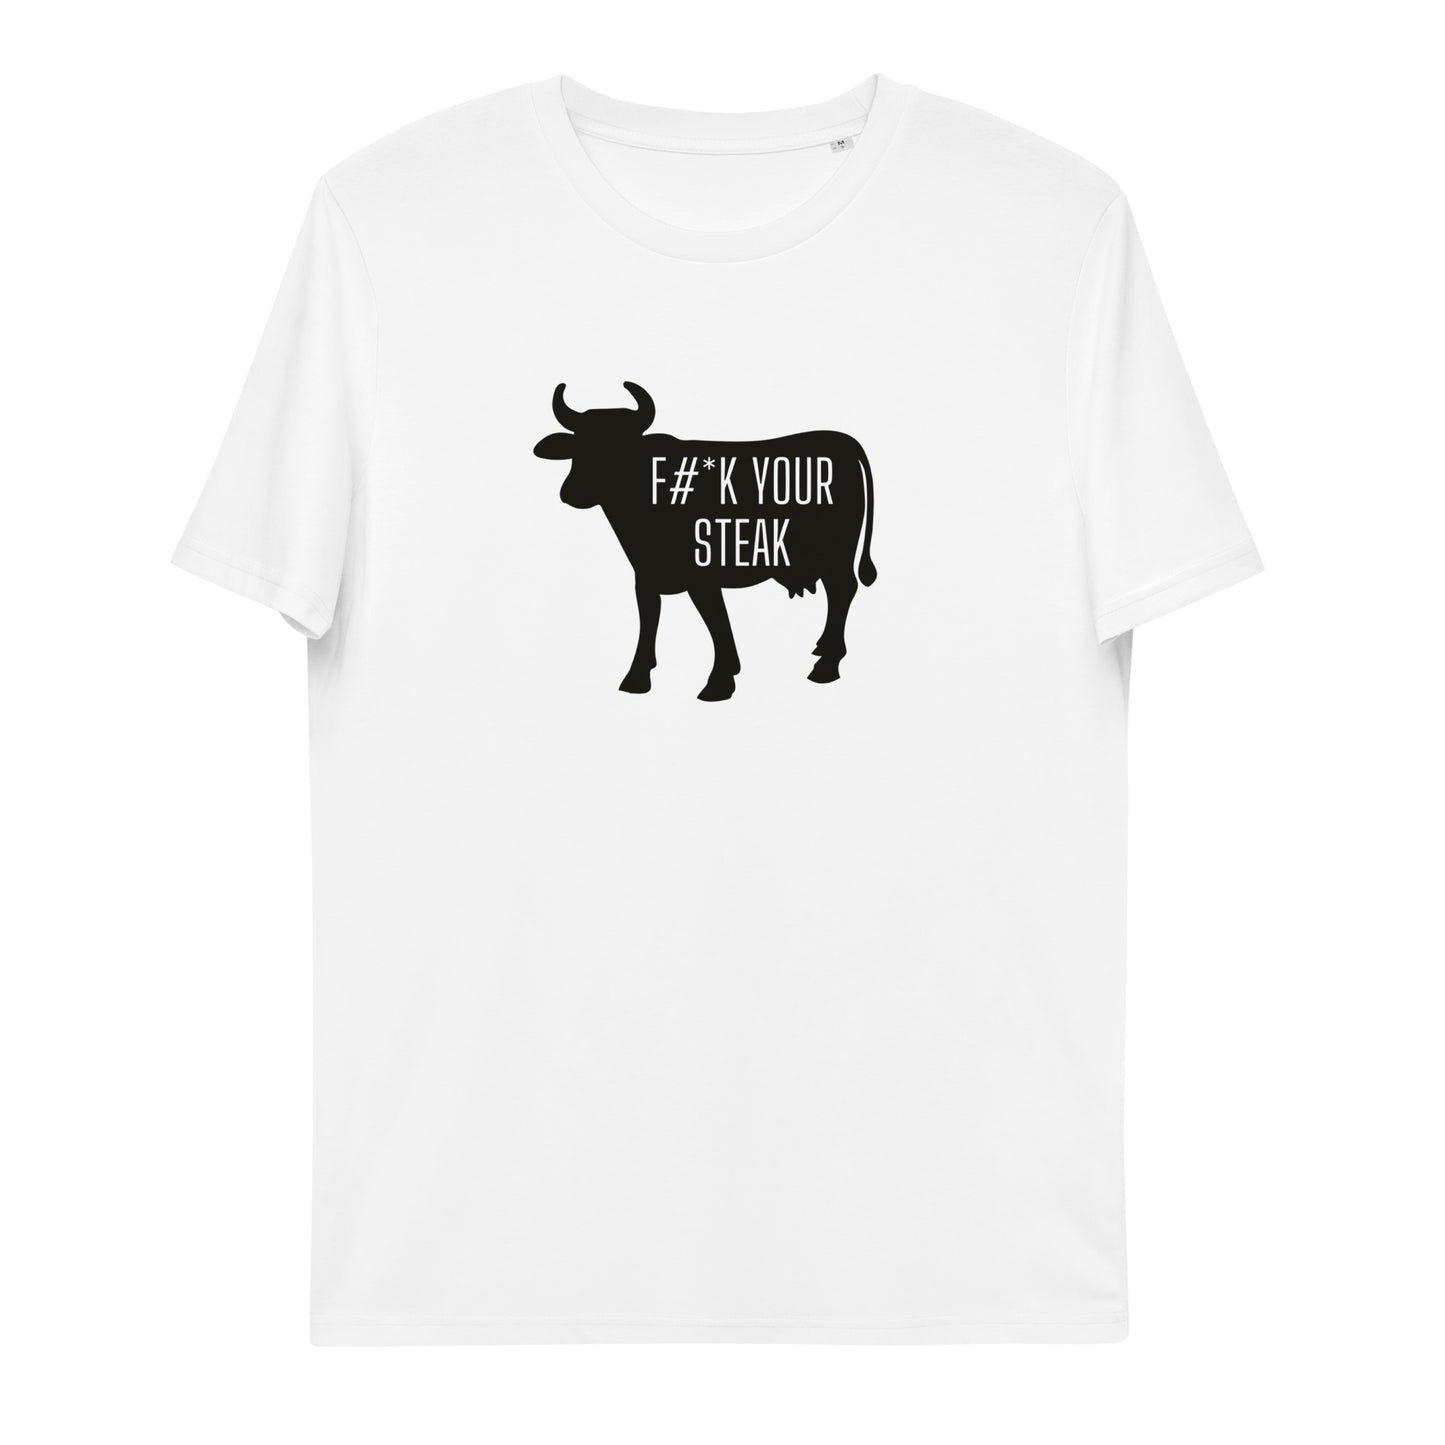 VEGAN " F&$K Your Steak" Unisex organic cotton t-shirt